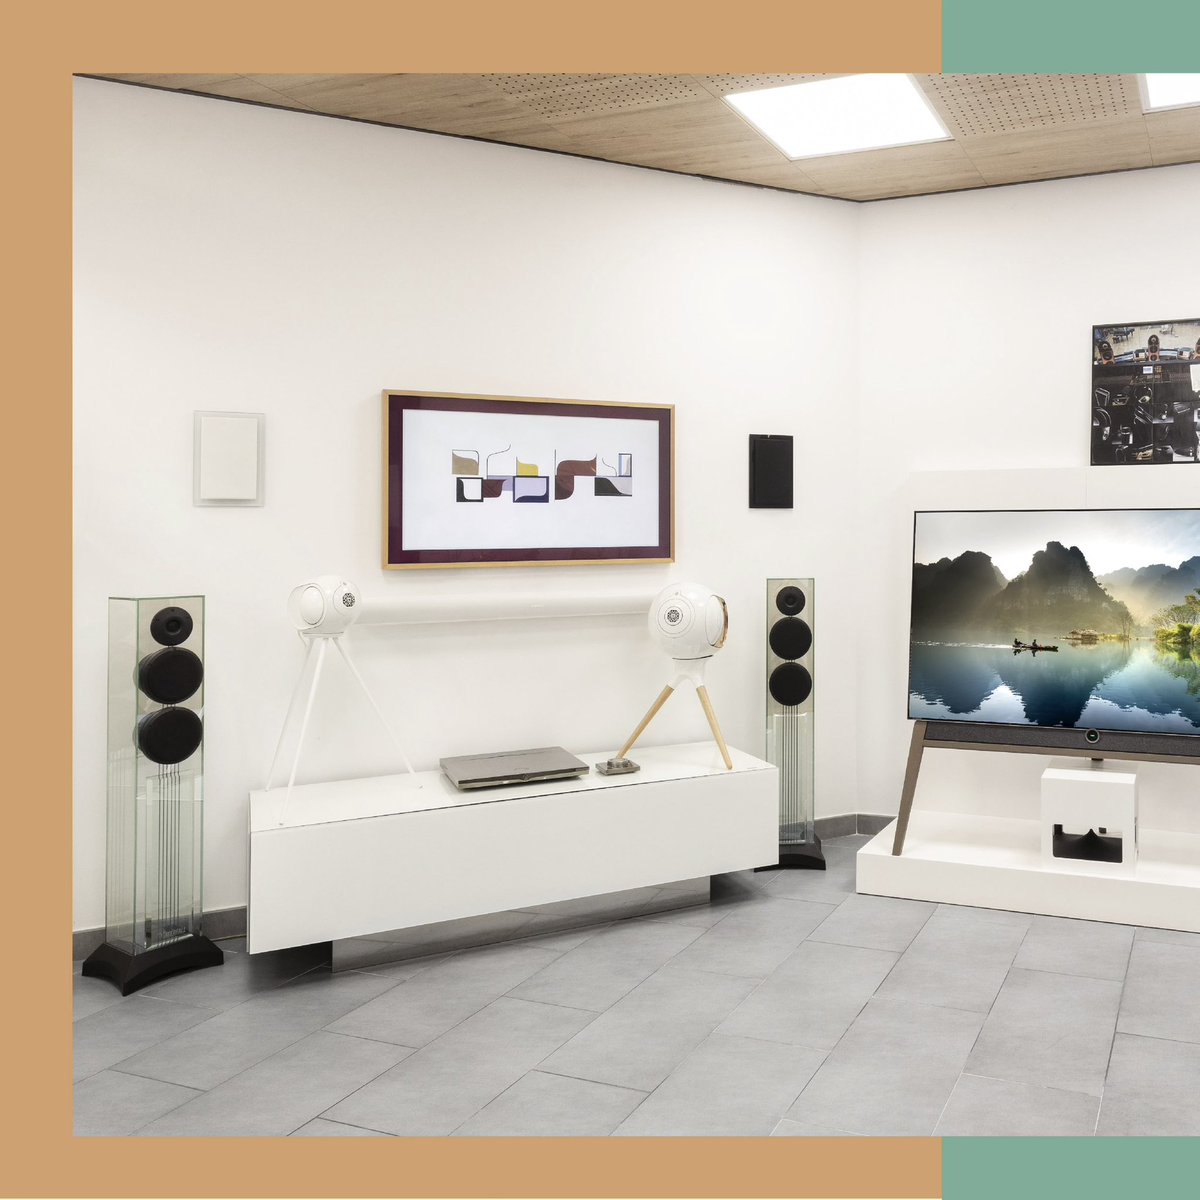 Beautiful showroom by #fresiamedia  👏🏼😍 

Enjoy Victoria Evo & Hurricane Evo!

#showroom #audioshowroom #hifisystem #waterfallaudio #luxuryspeakers #hifivideo #audiosystems #luxuryaudio #luxuryhome #sounddesign #sounddesigner #madeinfrance